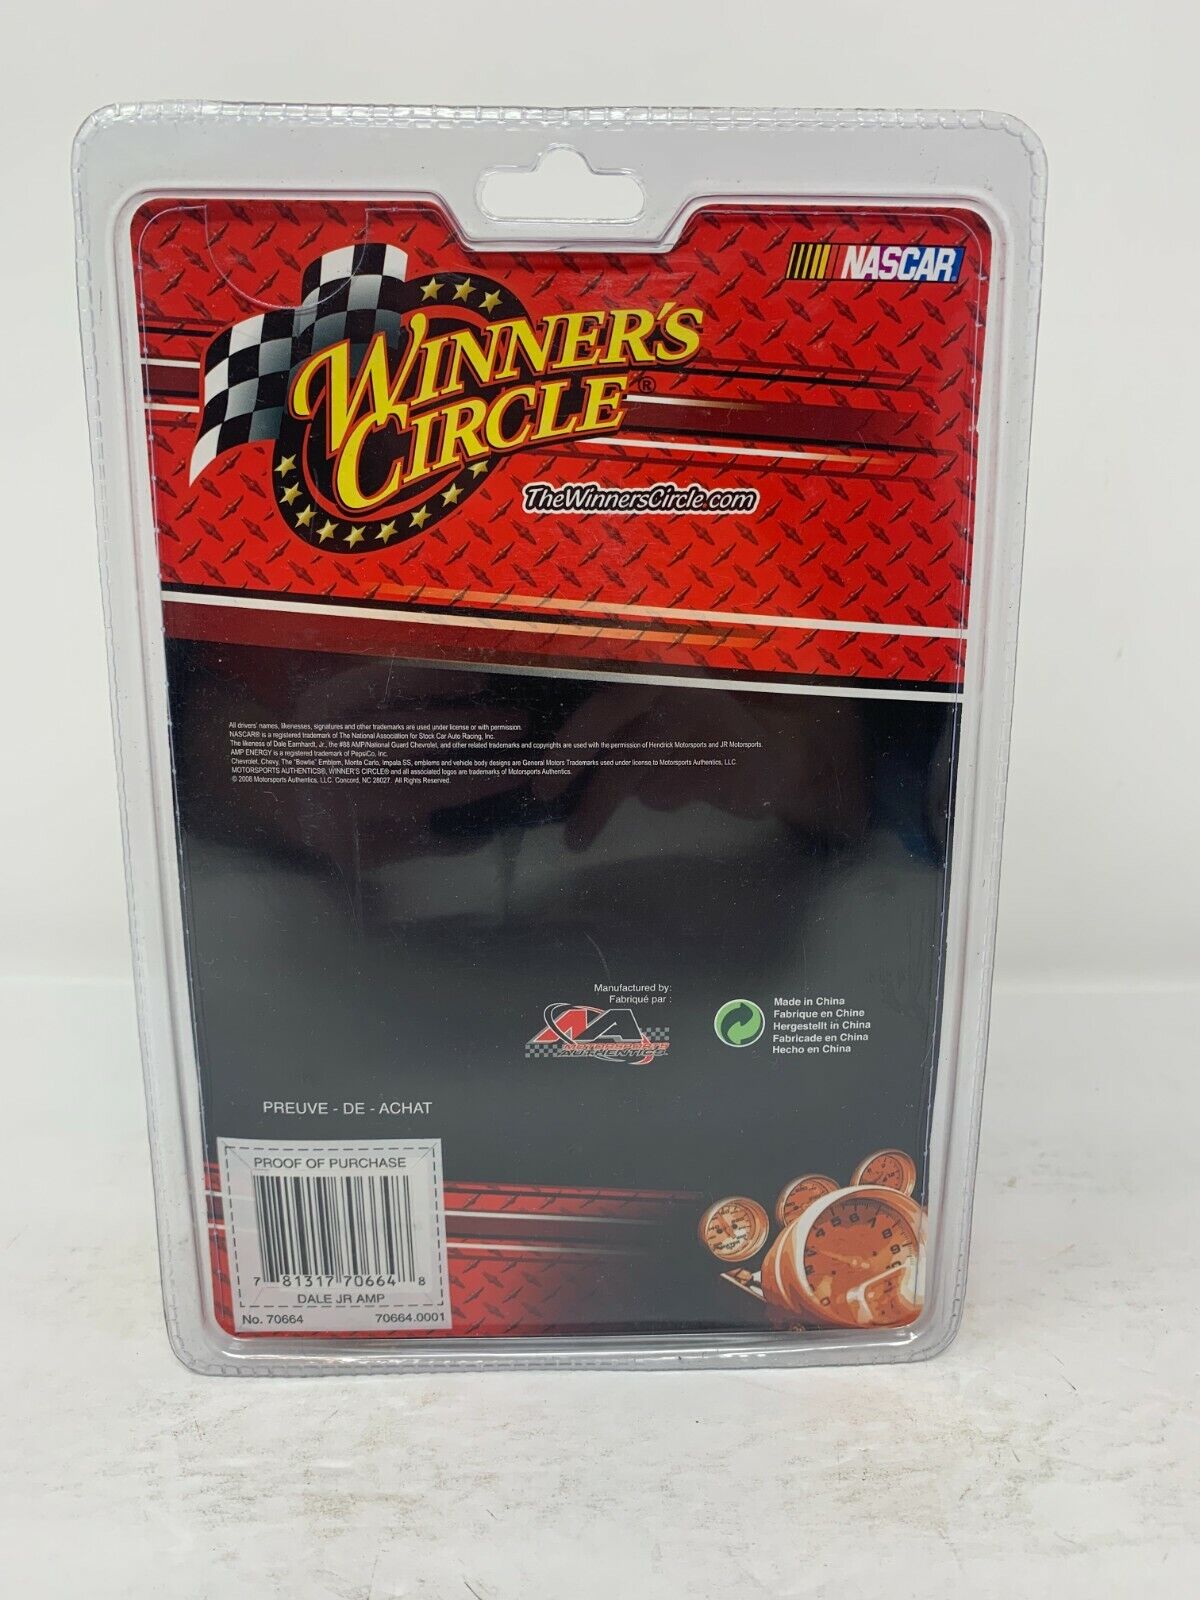 Motorsports Authentics Dale Earnhardt Jr. # 88 Winner's Circle Nascar Figurine